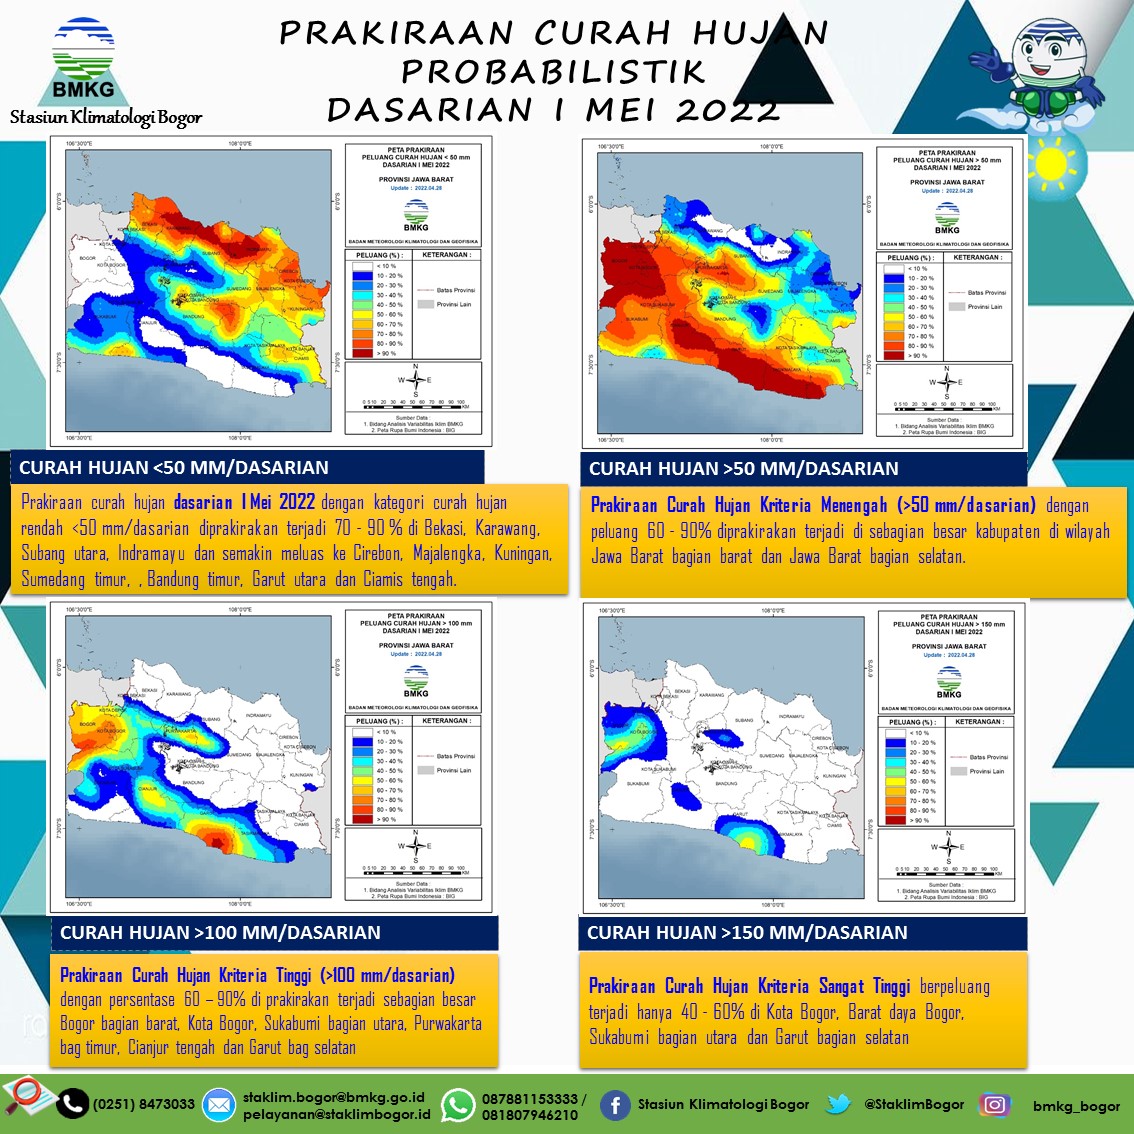 Prakiraan Curah Hujan Probabilistik Jawa Barat